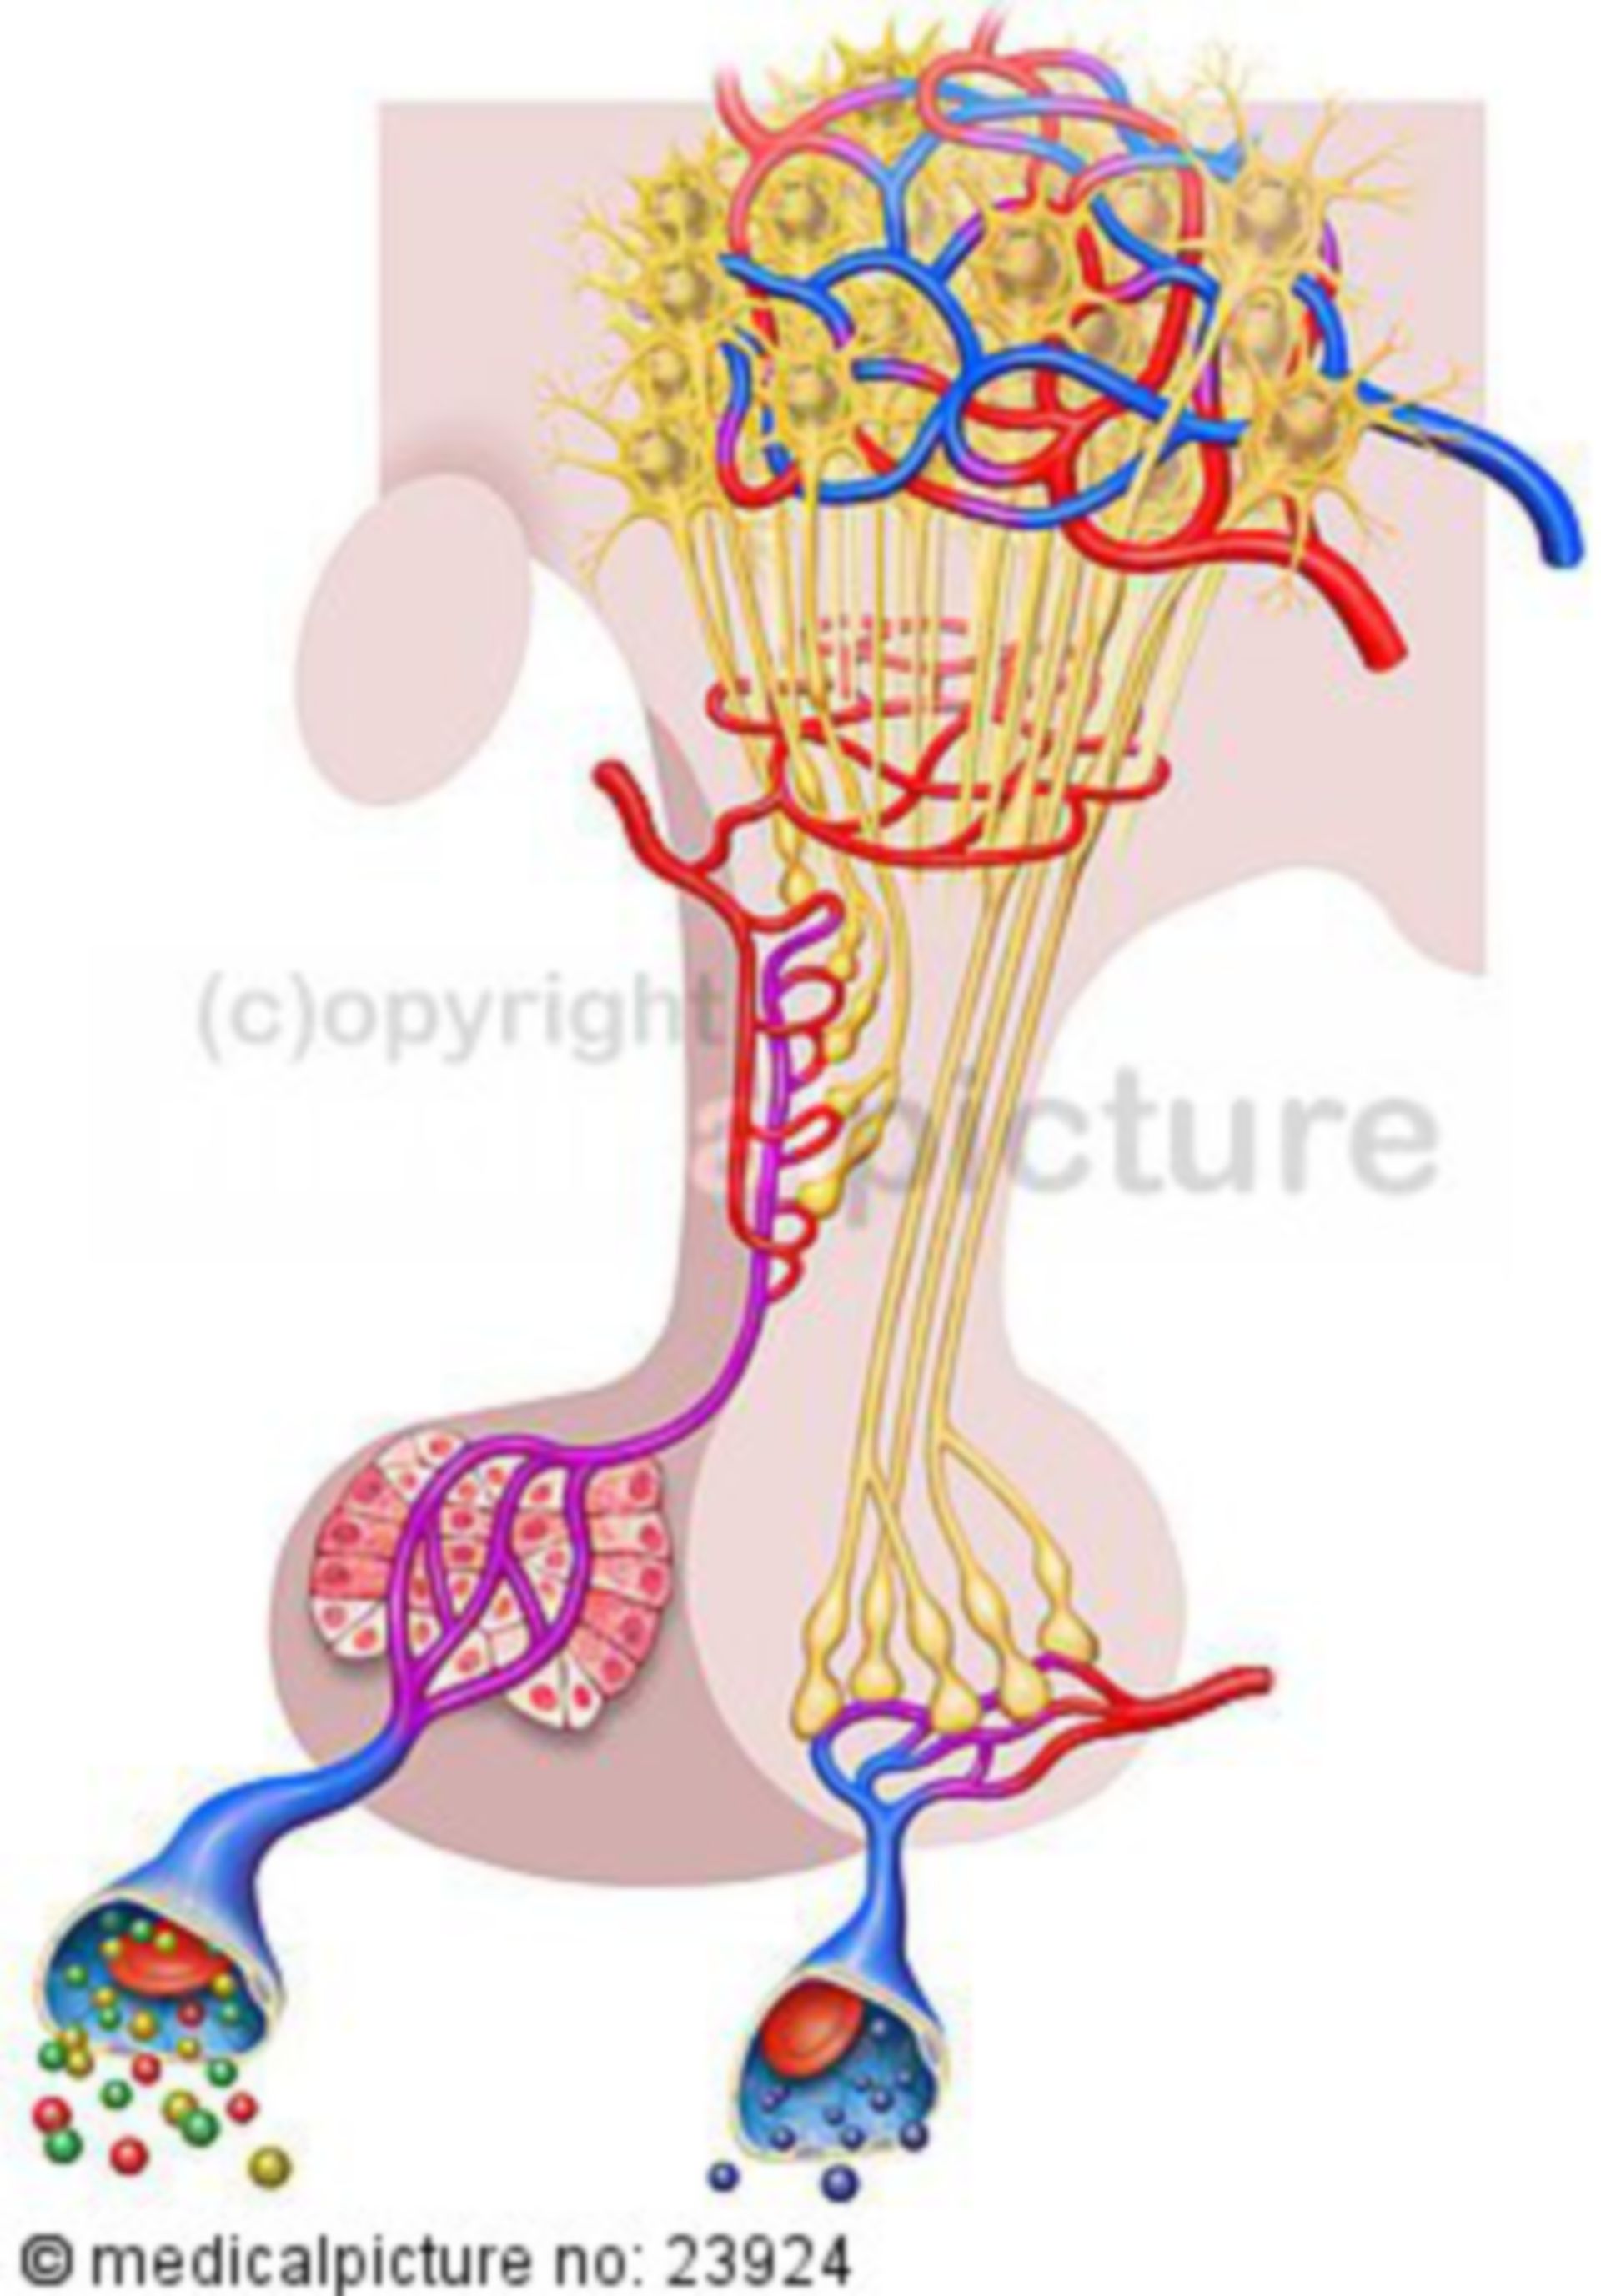 Hypothalamus and hypophysis